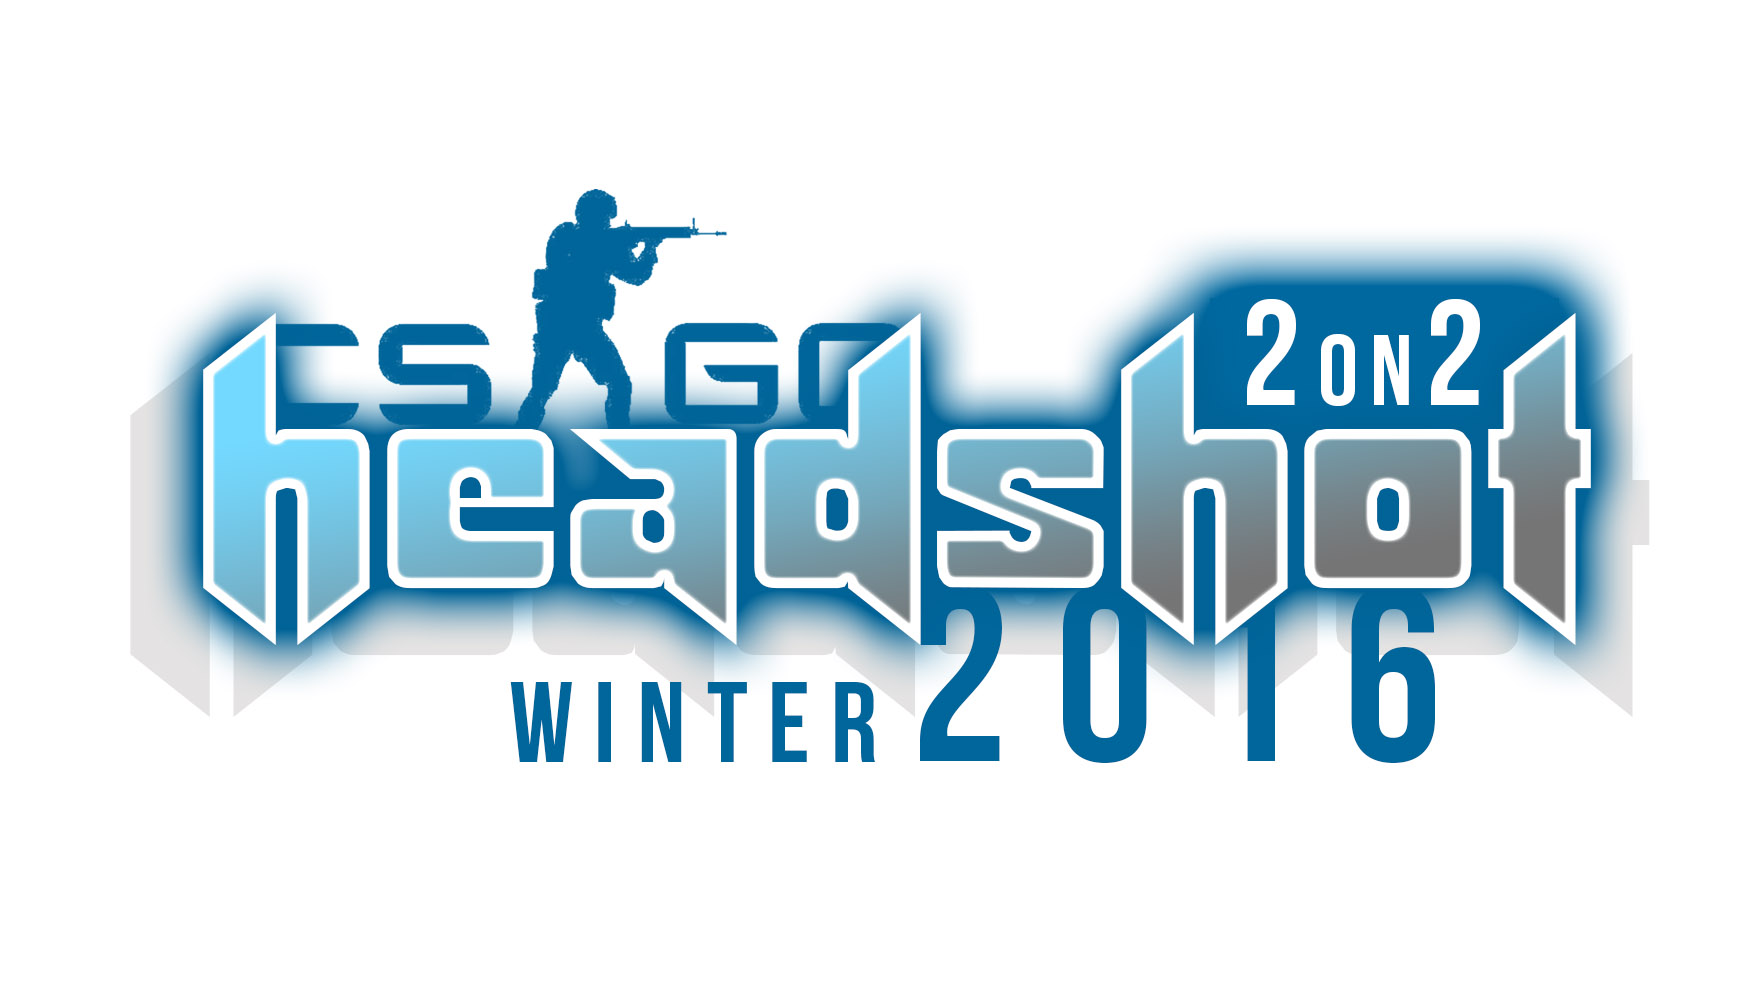 headshot2016 logo